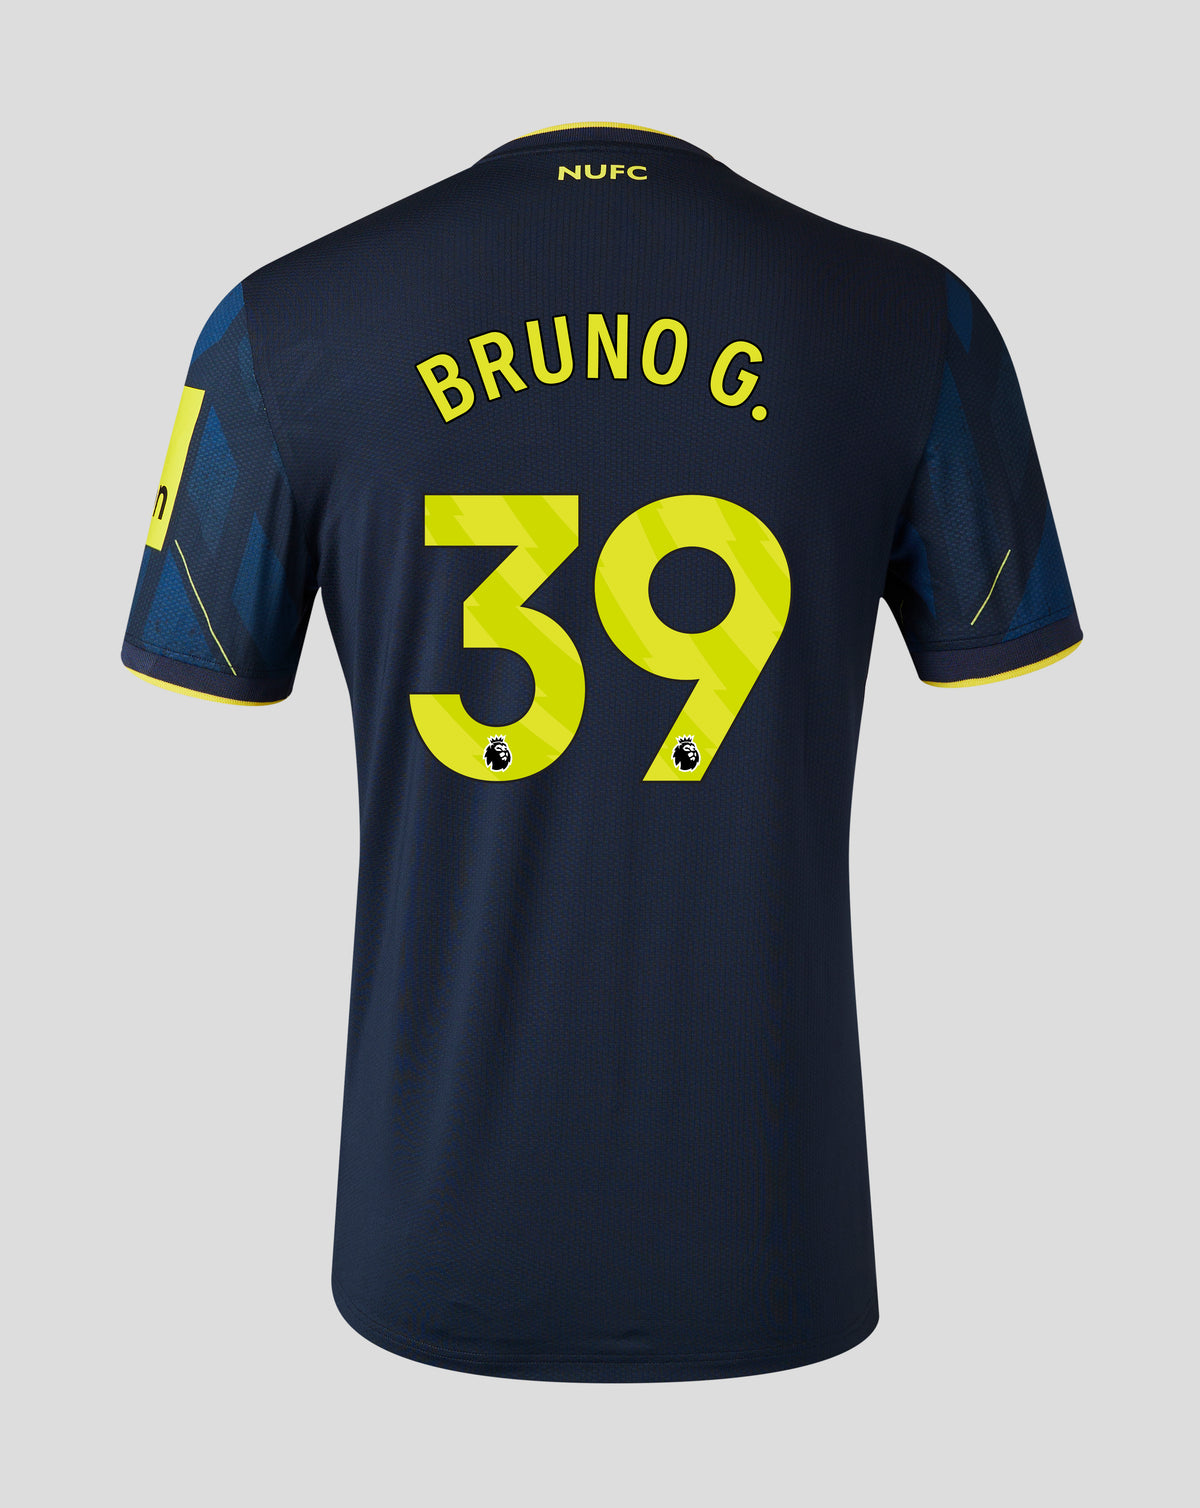 Bruno G. - Third 